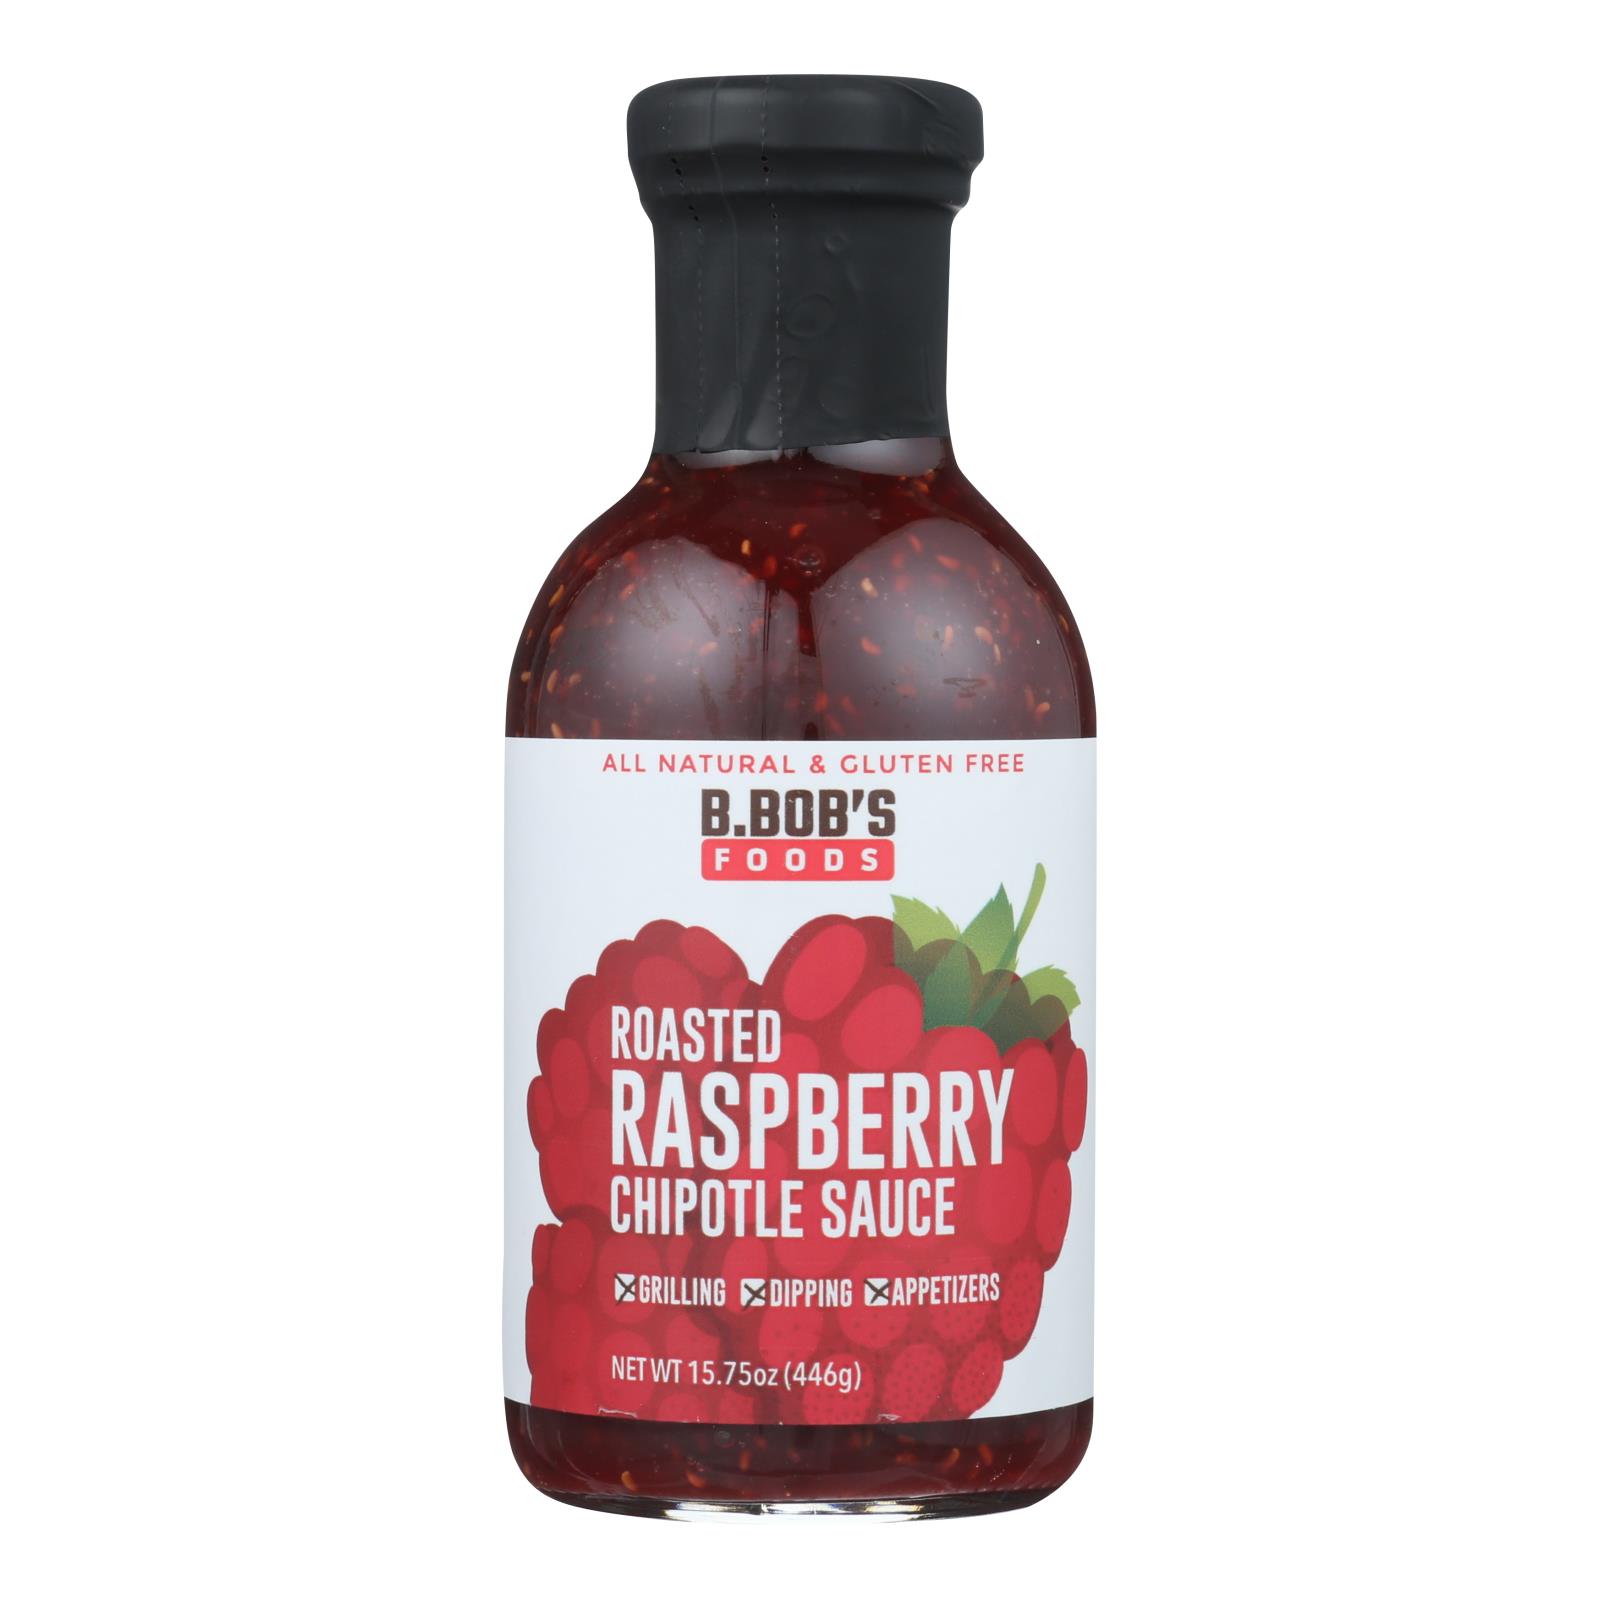 Bronco Bob's - Chipotle Sauce - Roasted Raspberry - 6개 묶음상품 - 15.75 fl oz.